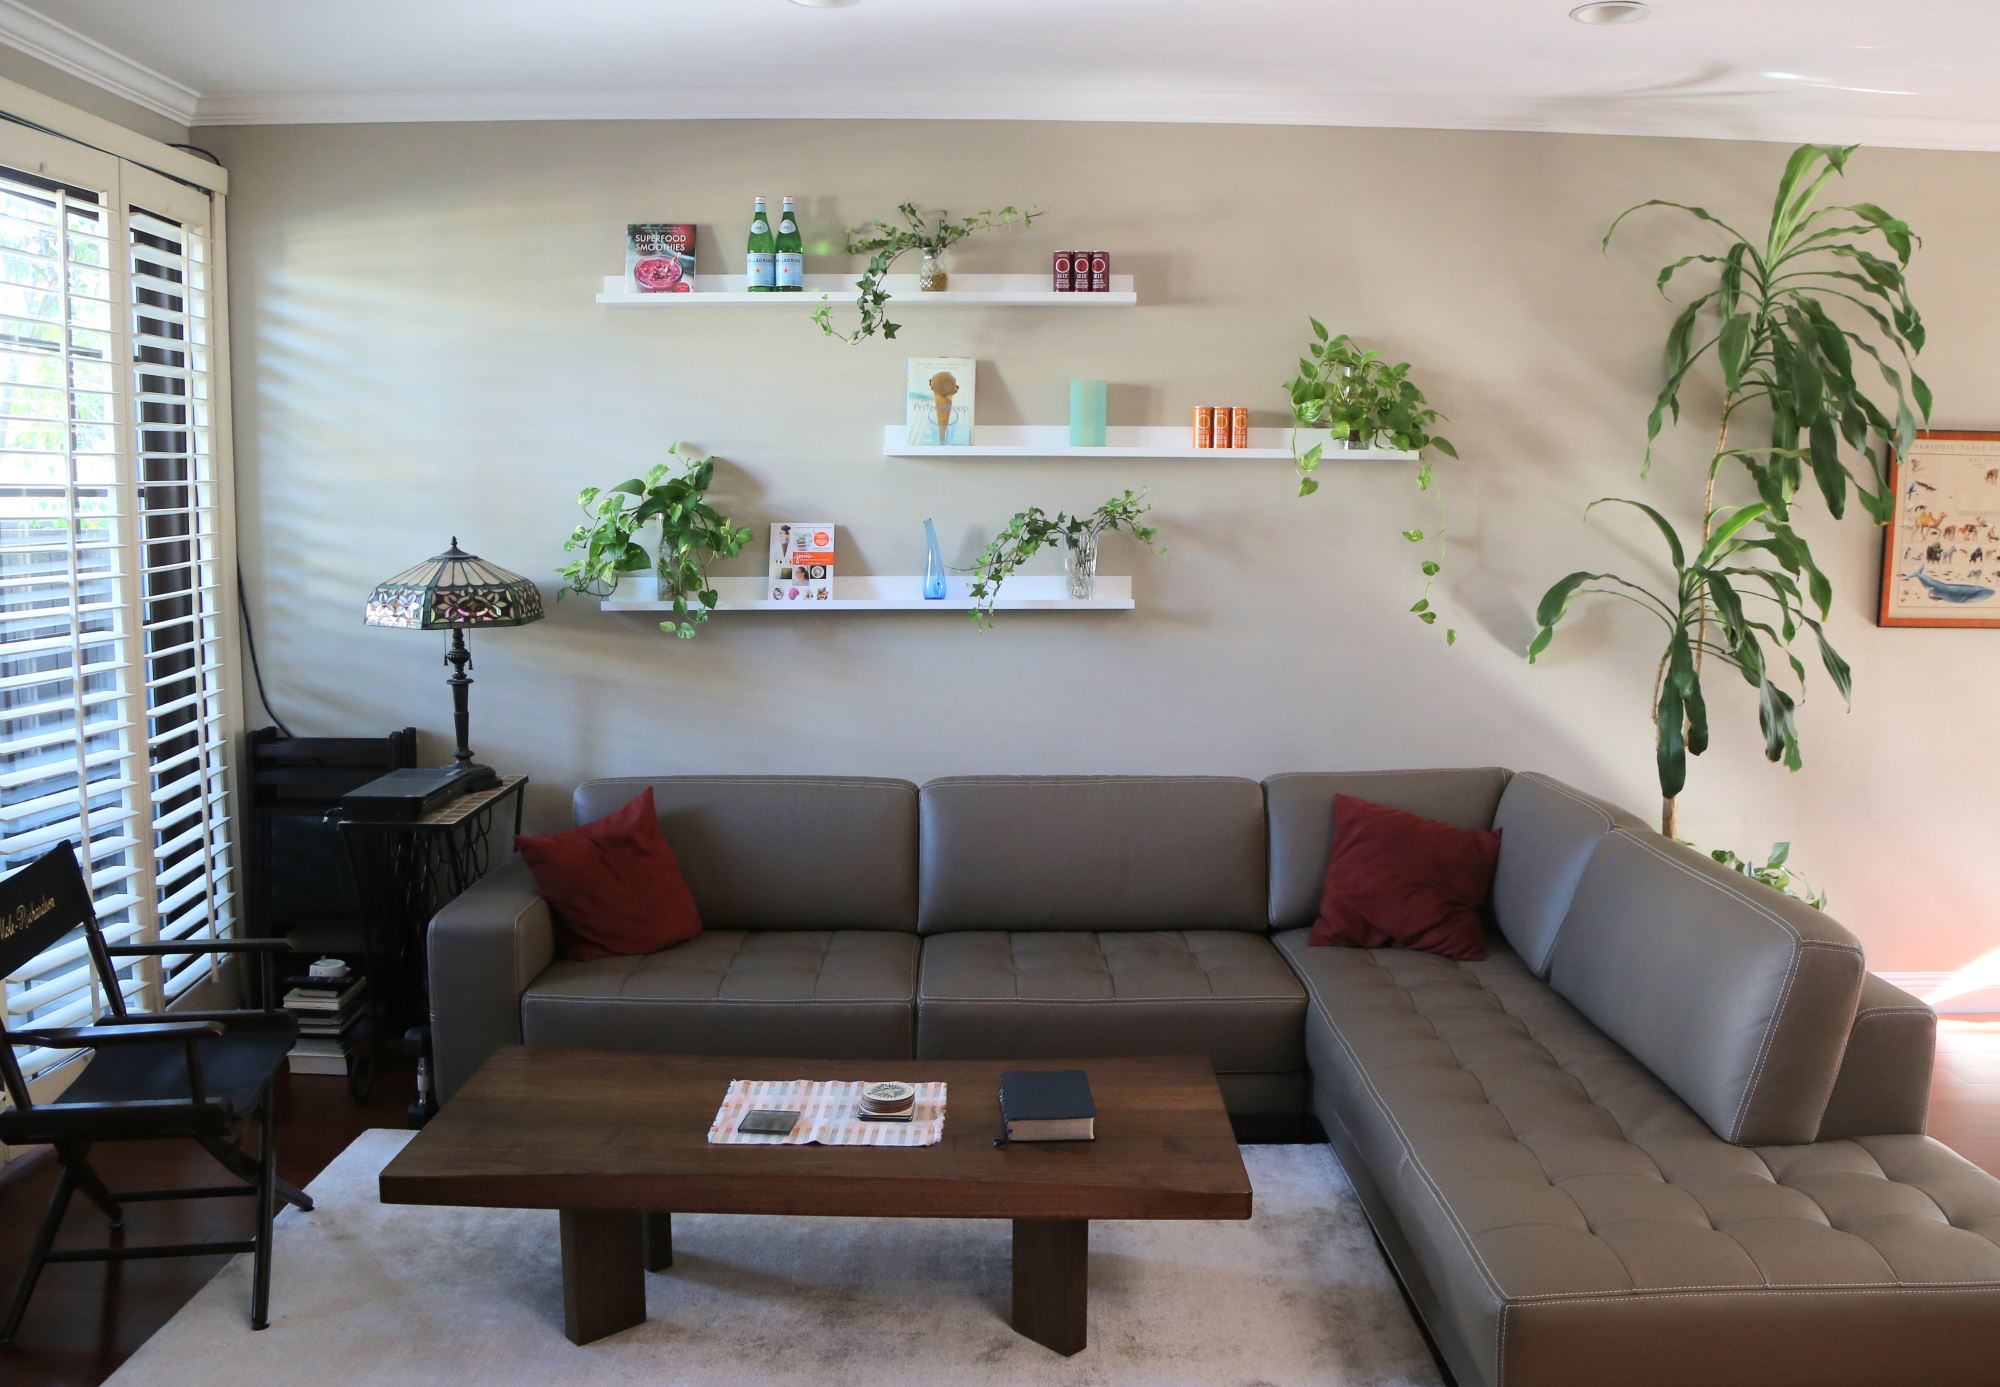 Floating living room shelves create a living wall